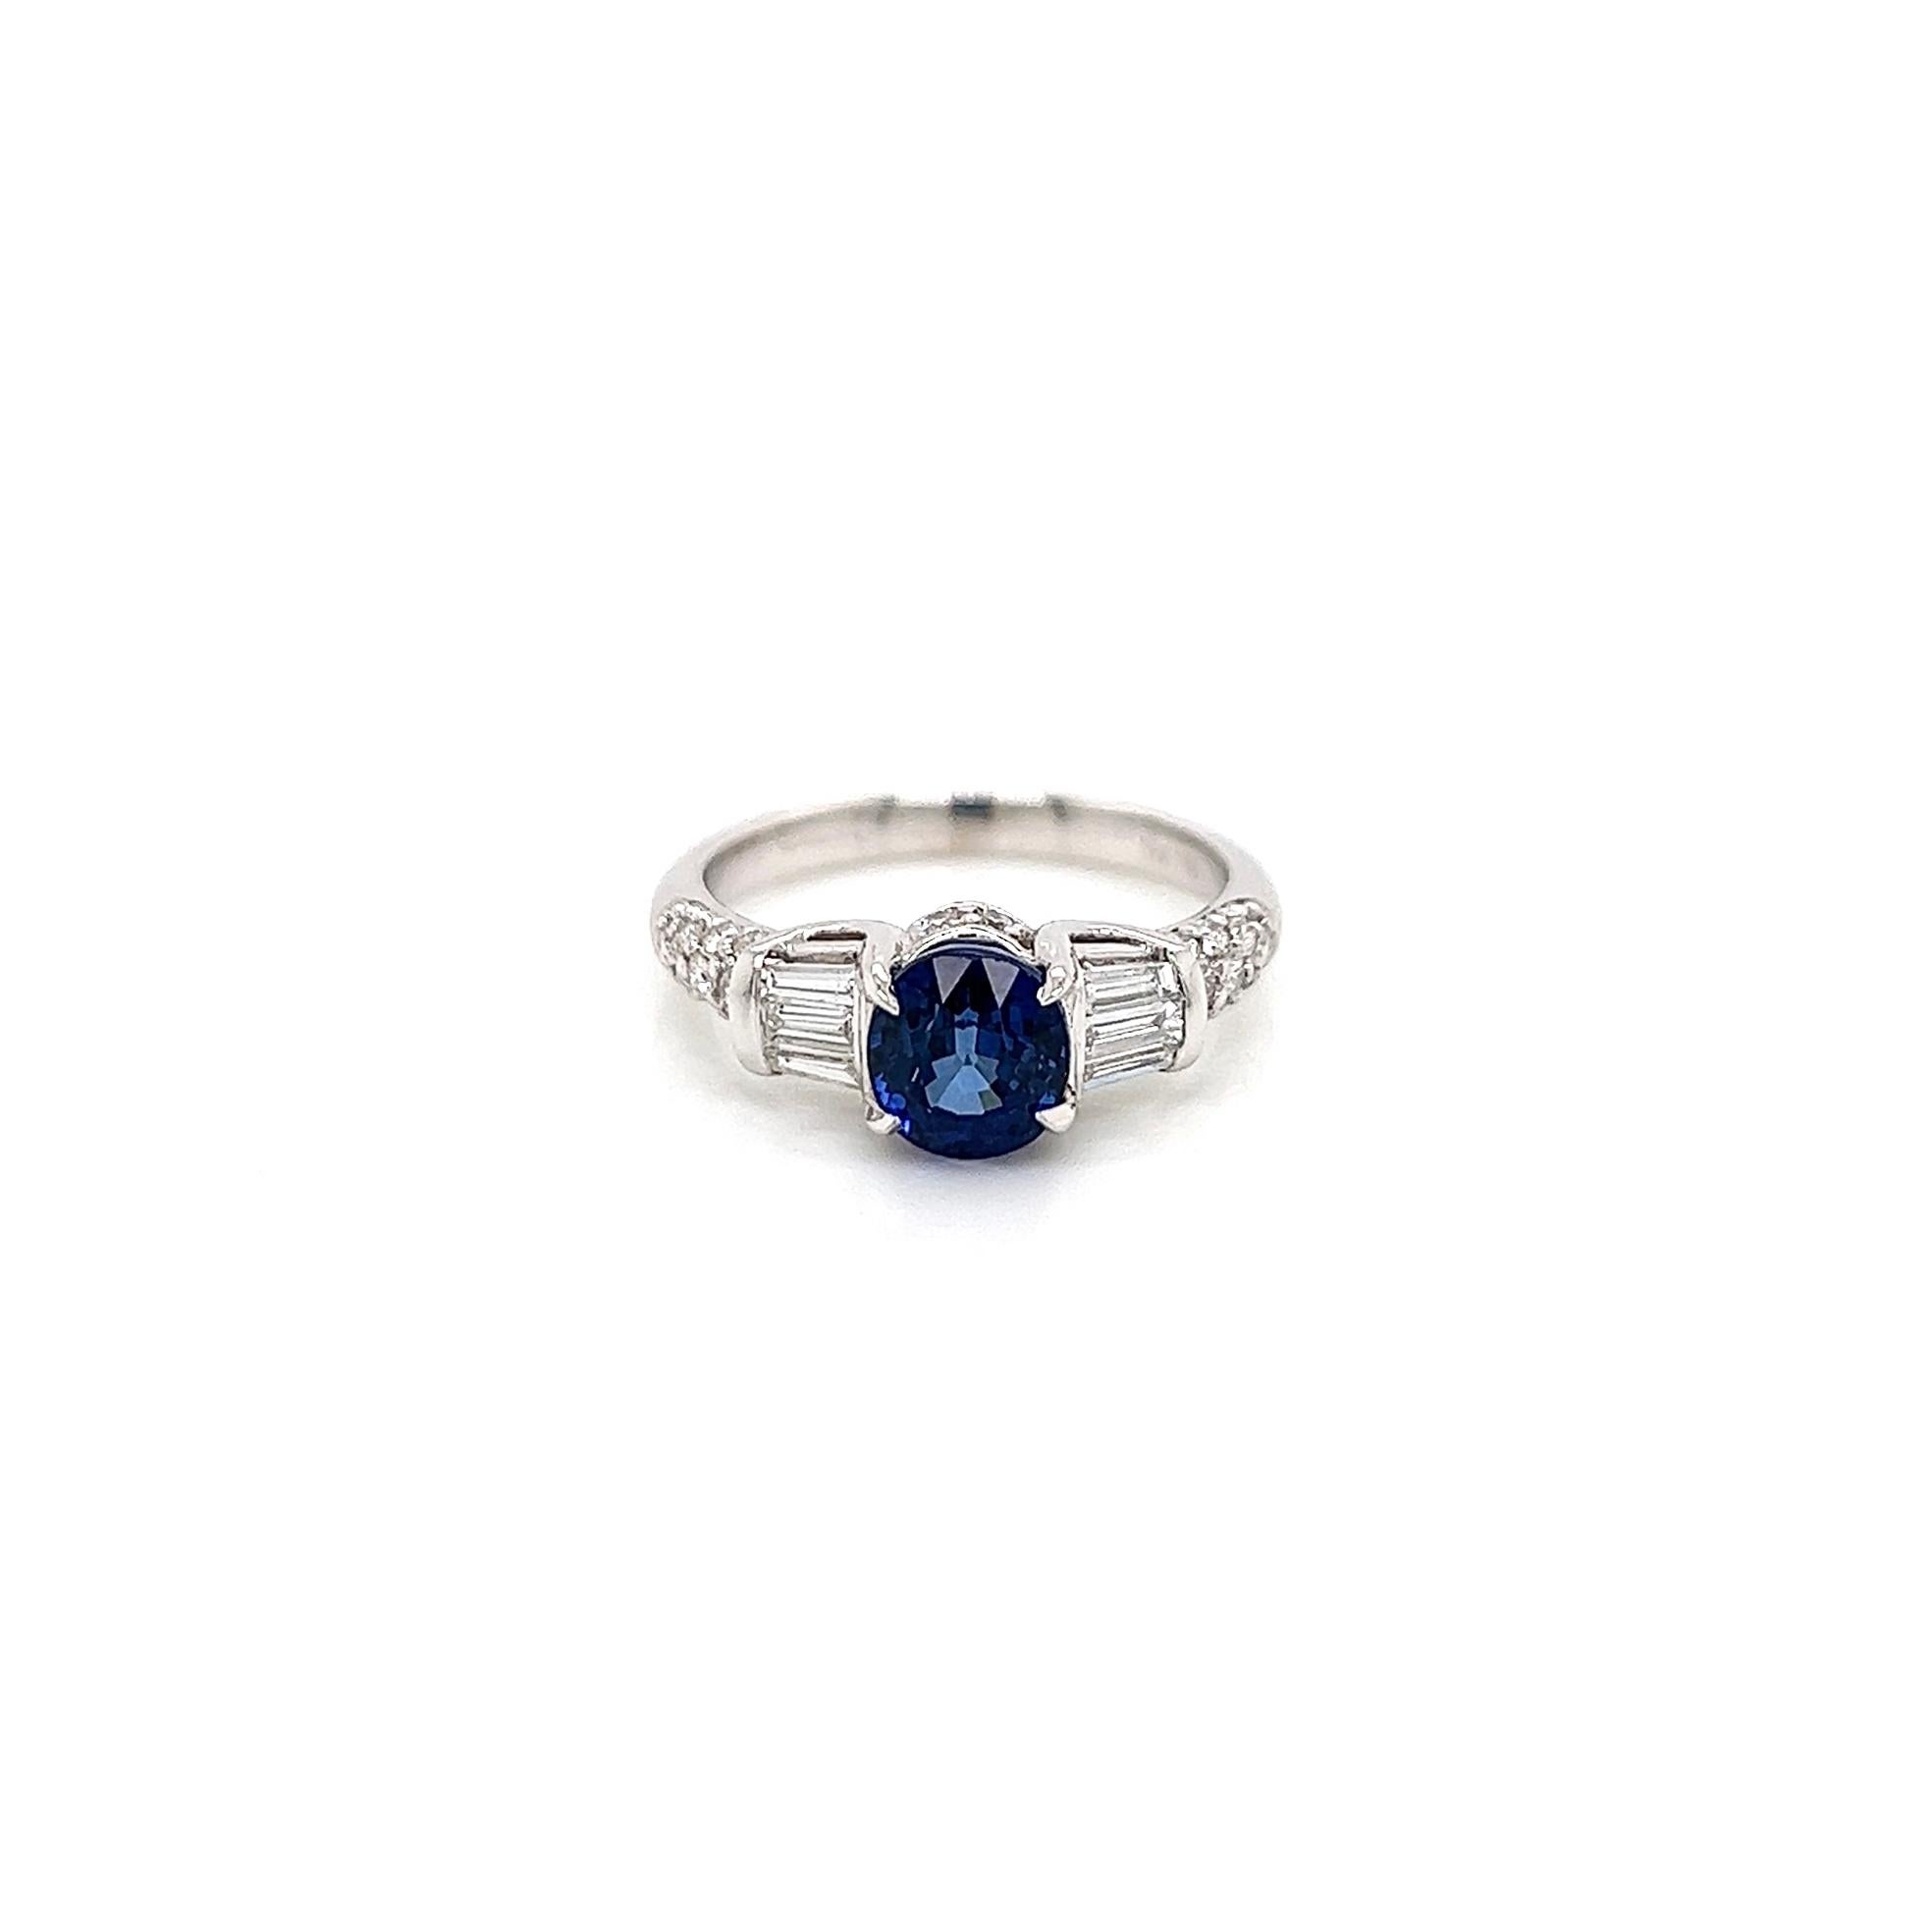 2.31 Total Carat Sapphire Diamond Engagement Ring

-Metal Type: 18K White Gold
-1.79 Carat Oval Cut Blue Sapphire
-0.28 Carat Baguette Side Natural Diamonds
-0.24 Carat Round Side Natural Diamonds
-Size 6.75

Made in New York City.